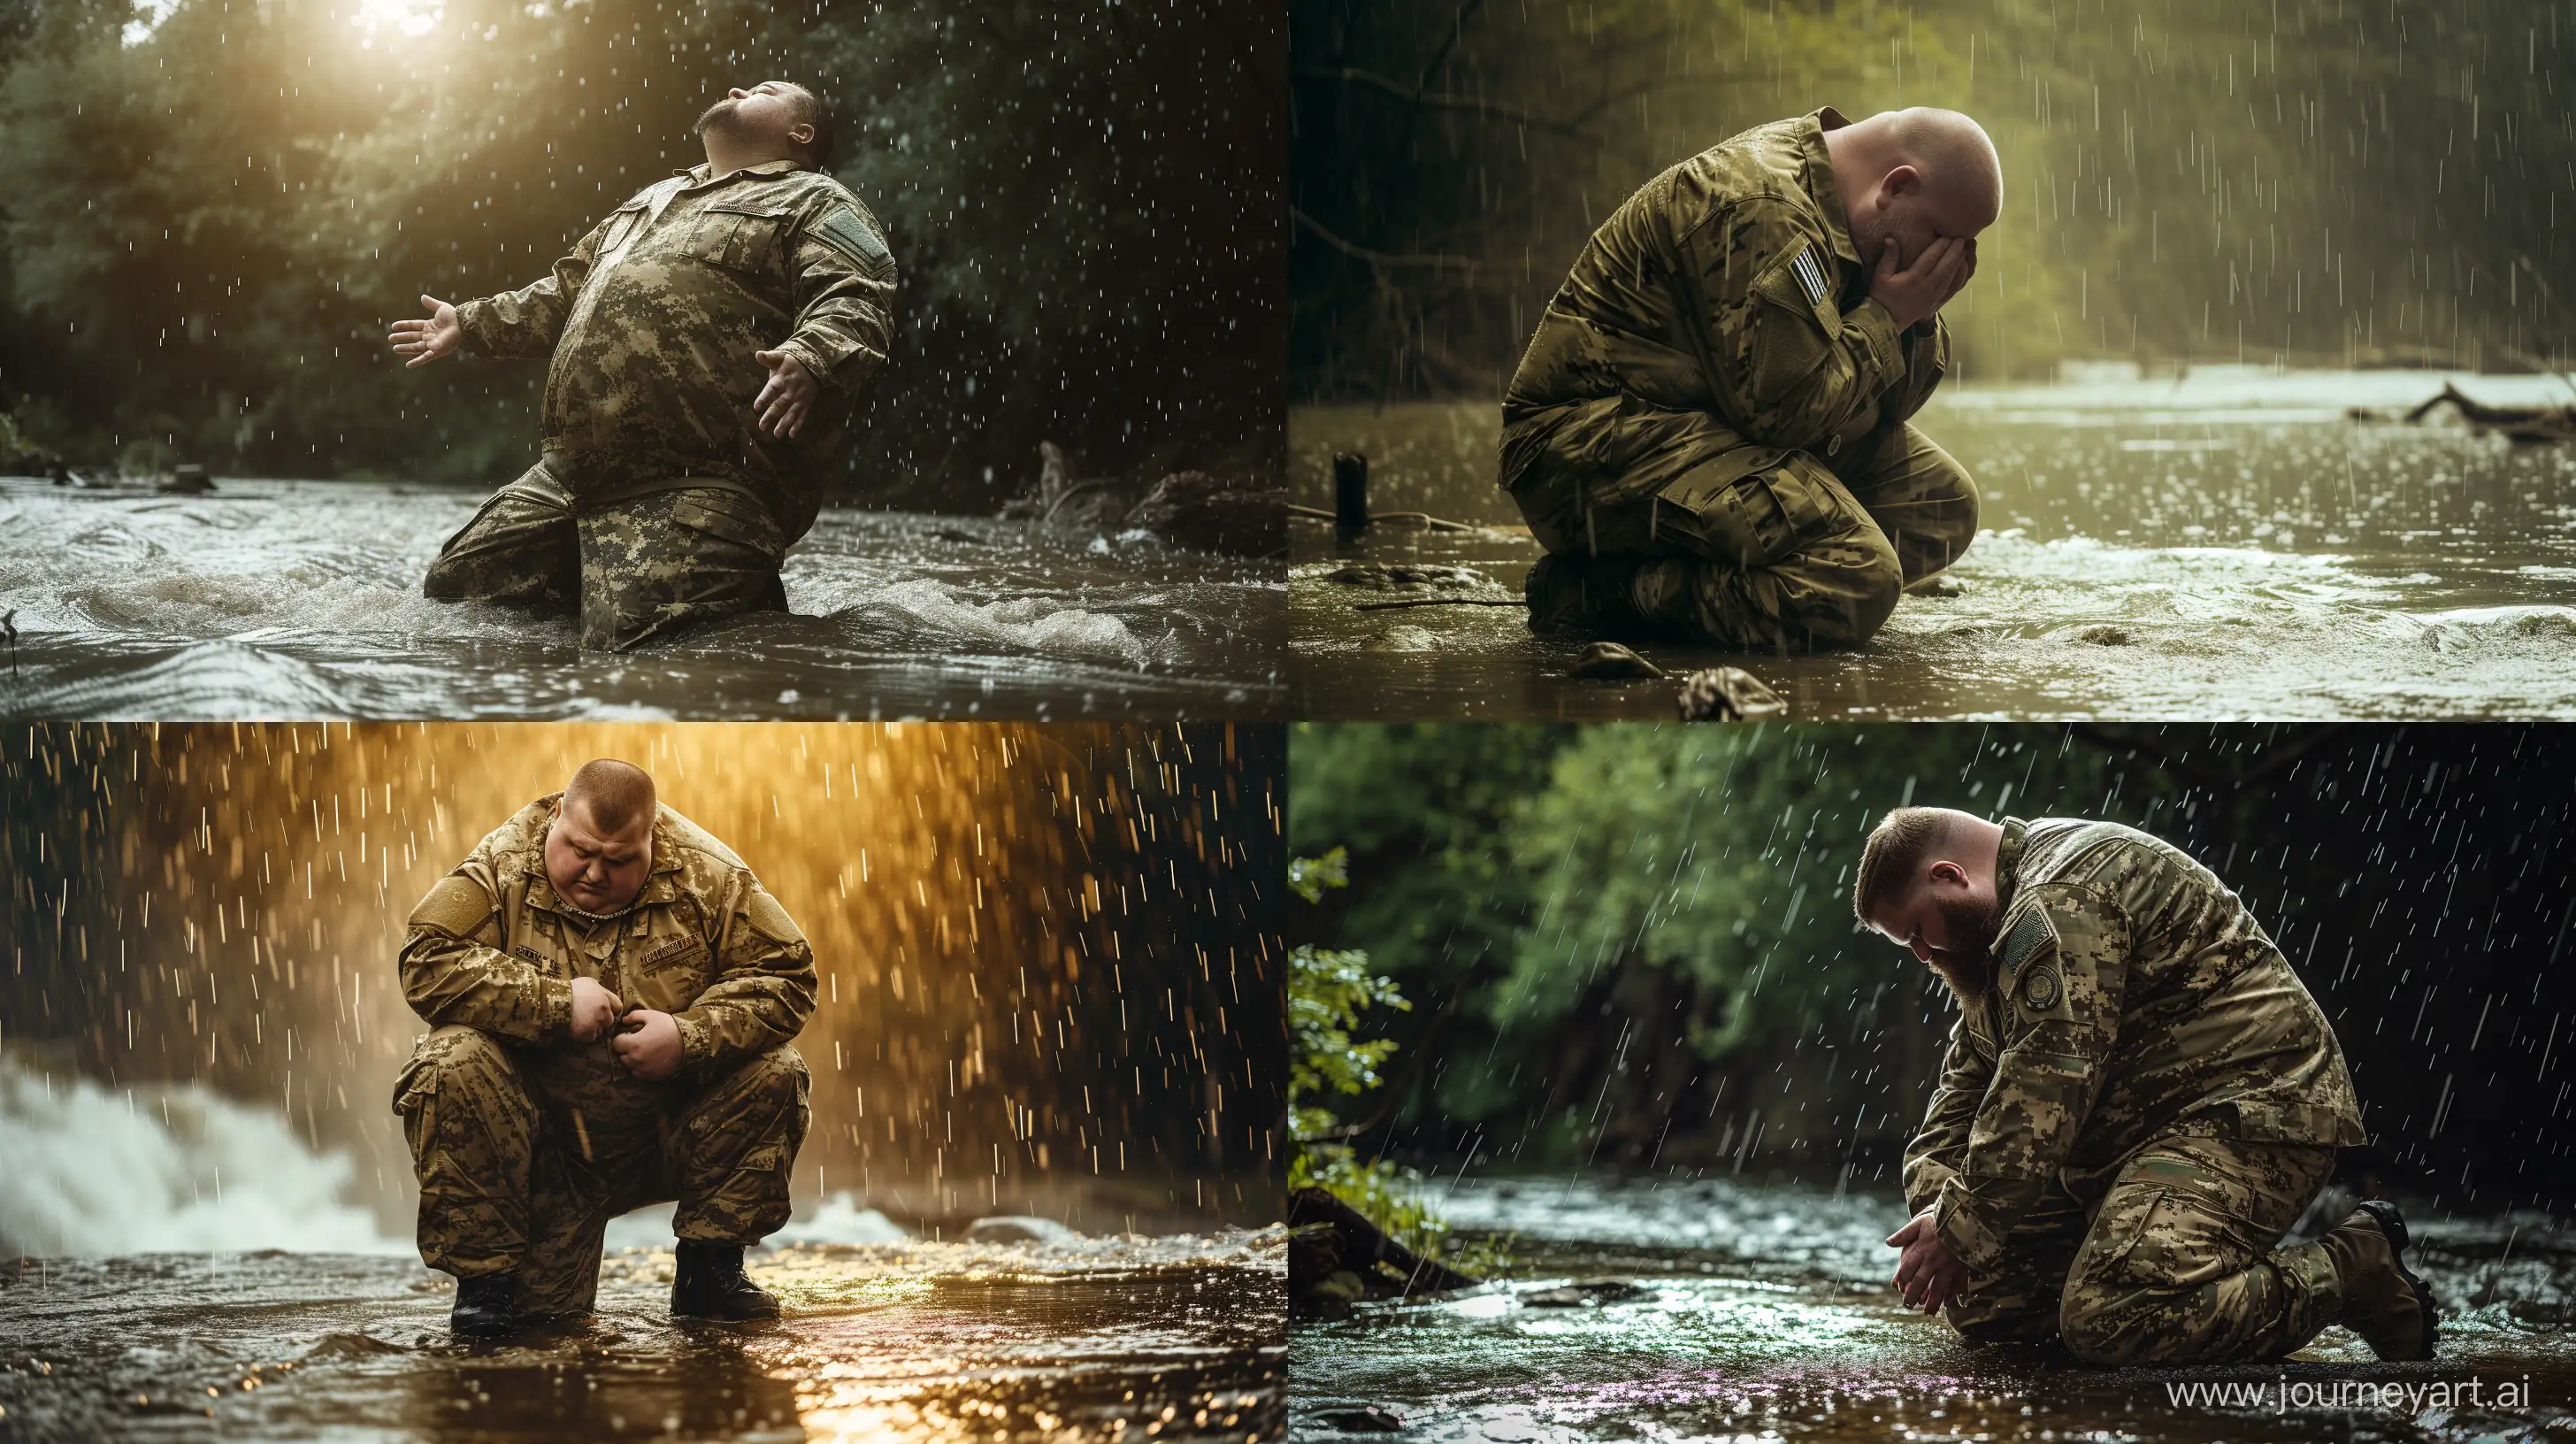 Elderly-Military-Veteran-Kneeling-in-the-Rain-by-the-River